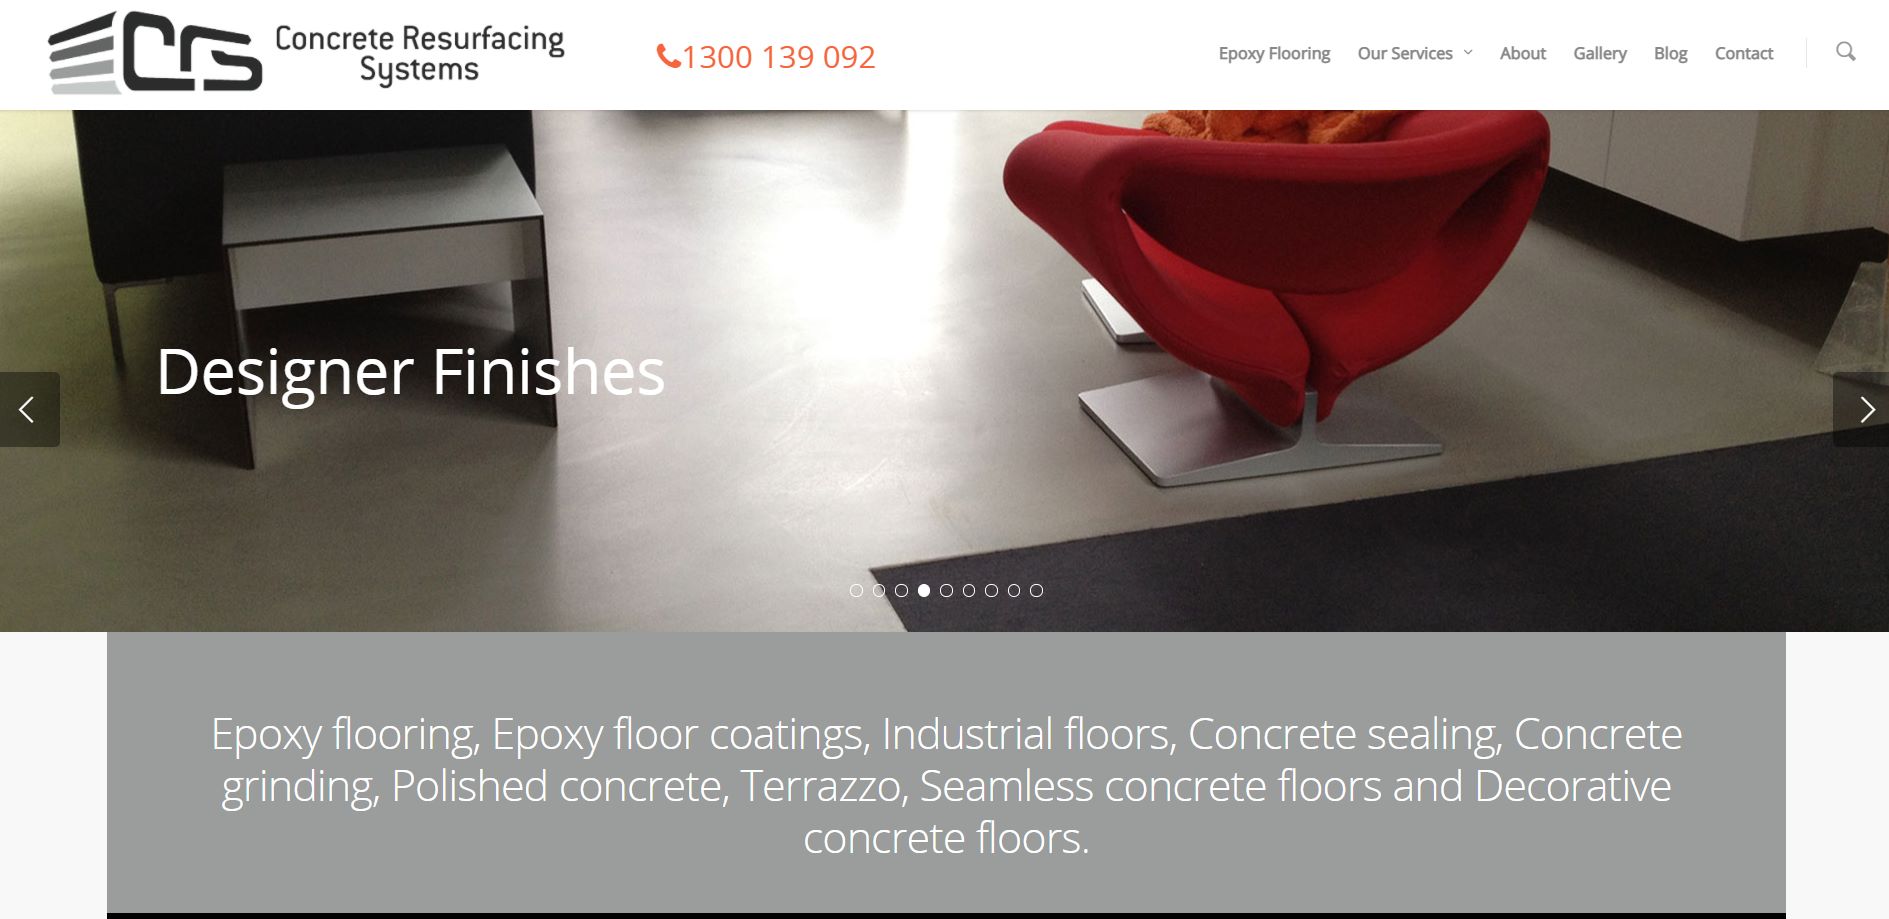 Concrete Resurfacing Systems Epoxy Flooring Coatings Melbourne